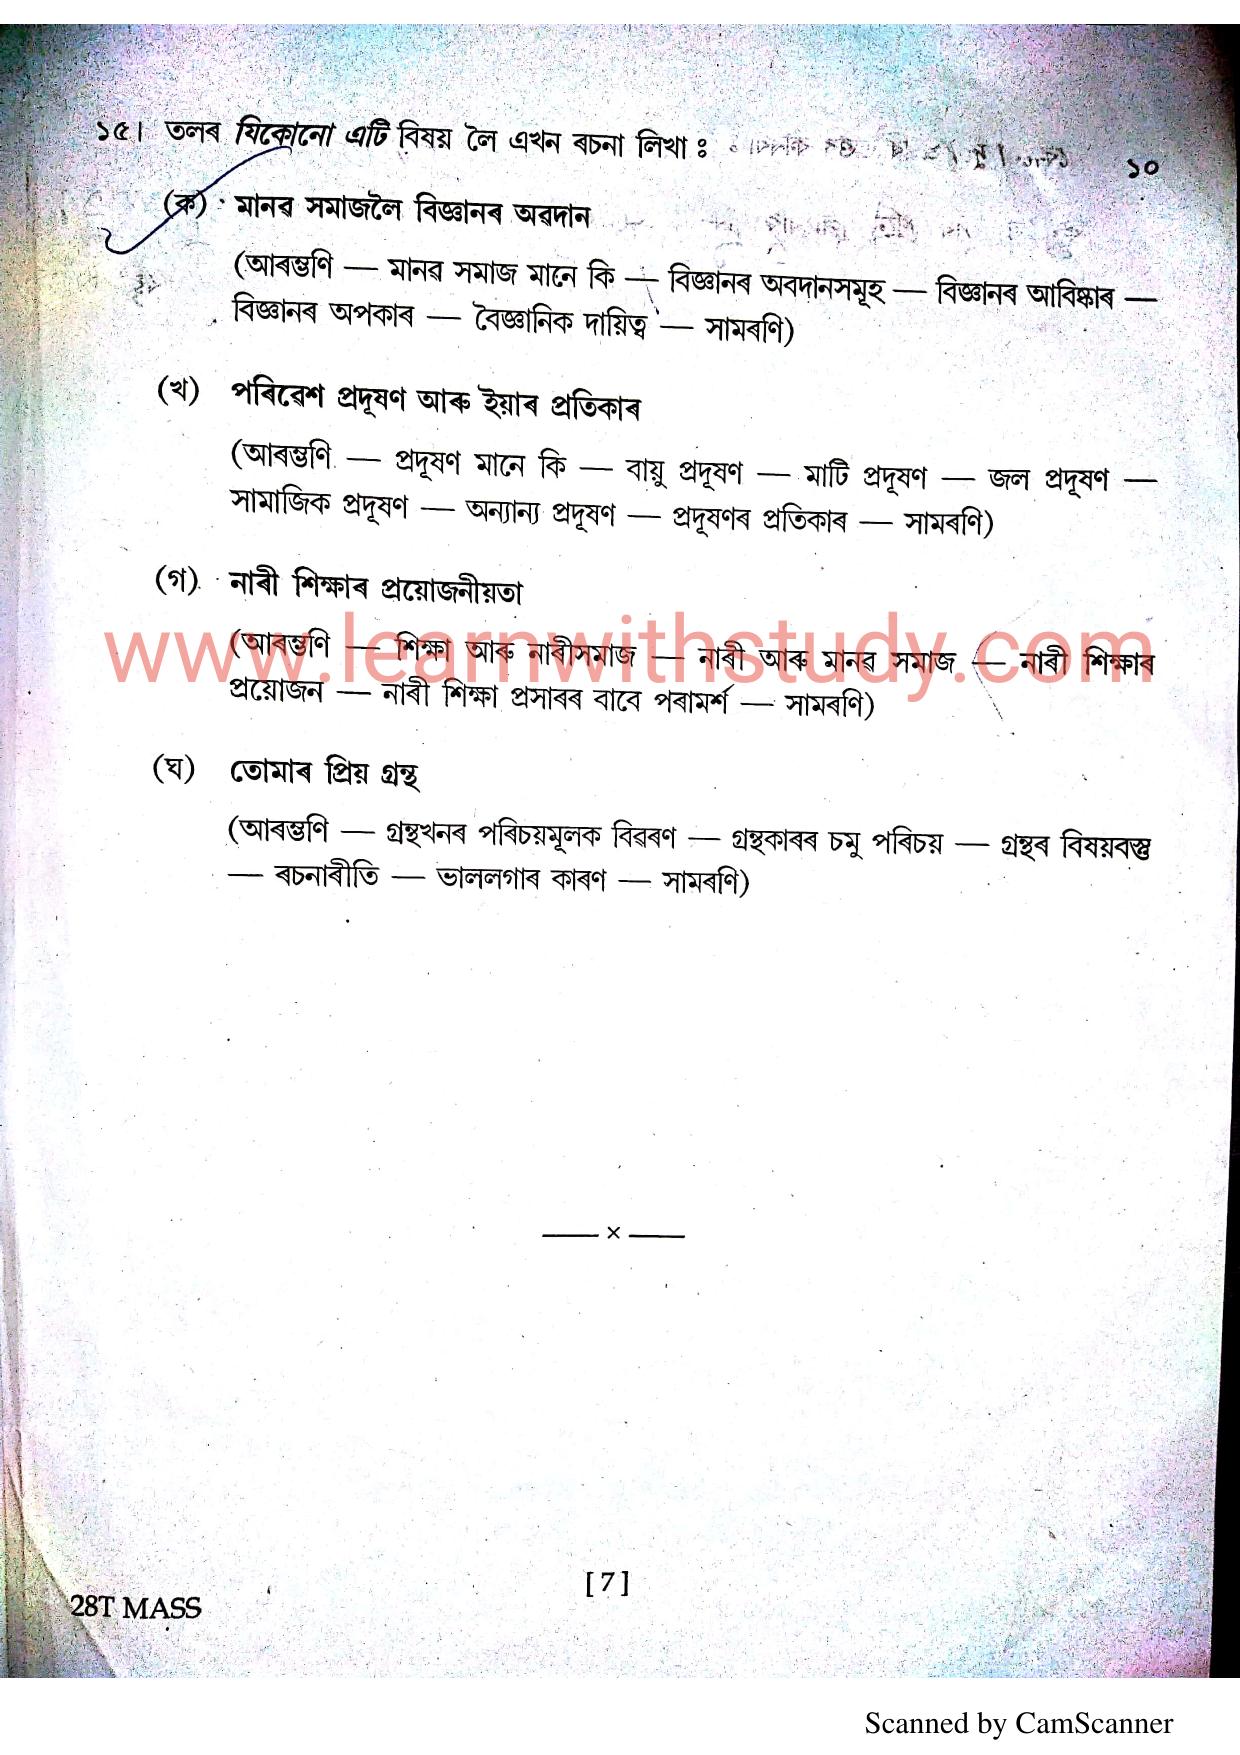 Assam HS 2nd Year Assamese MIL 2018 Question Paper - Page 7